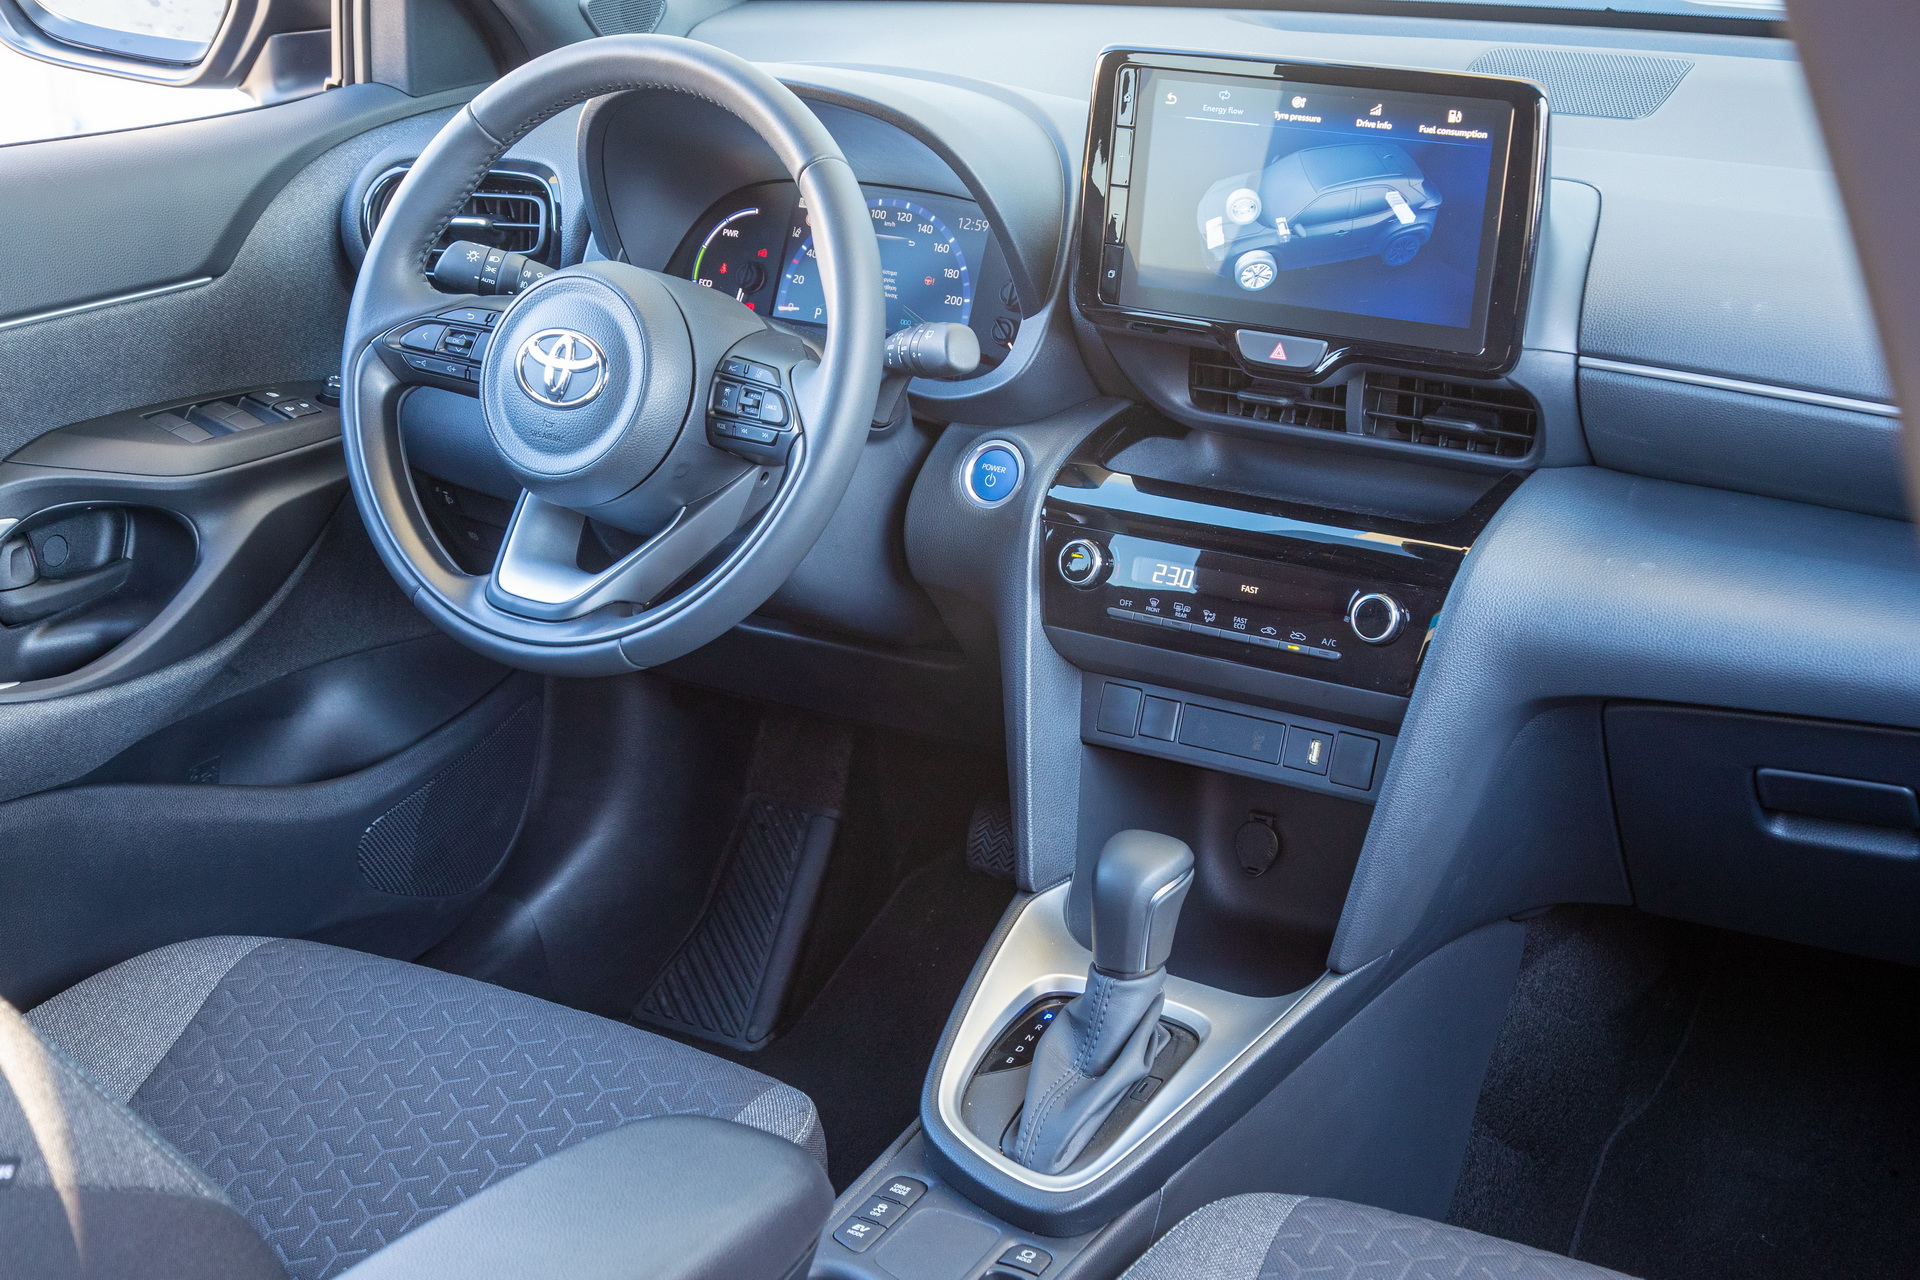 B-SUV comparative test: Τoyota Yaris Cross 1.5 Hybrid vs Volkswagen Taigo 1.0 TSI 110 PS DSG, photo credits DRIVE Magazine/Thanassis Koutsogiannis